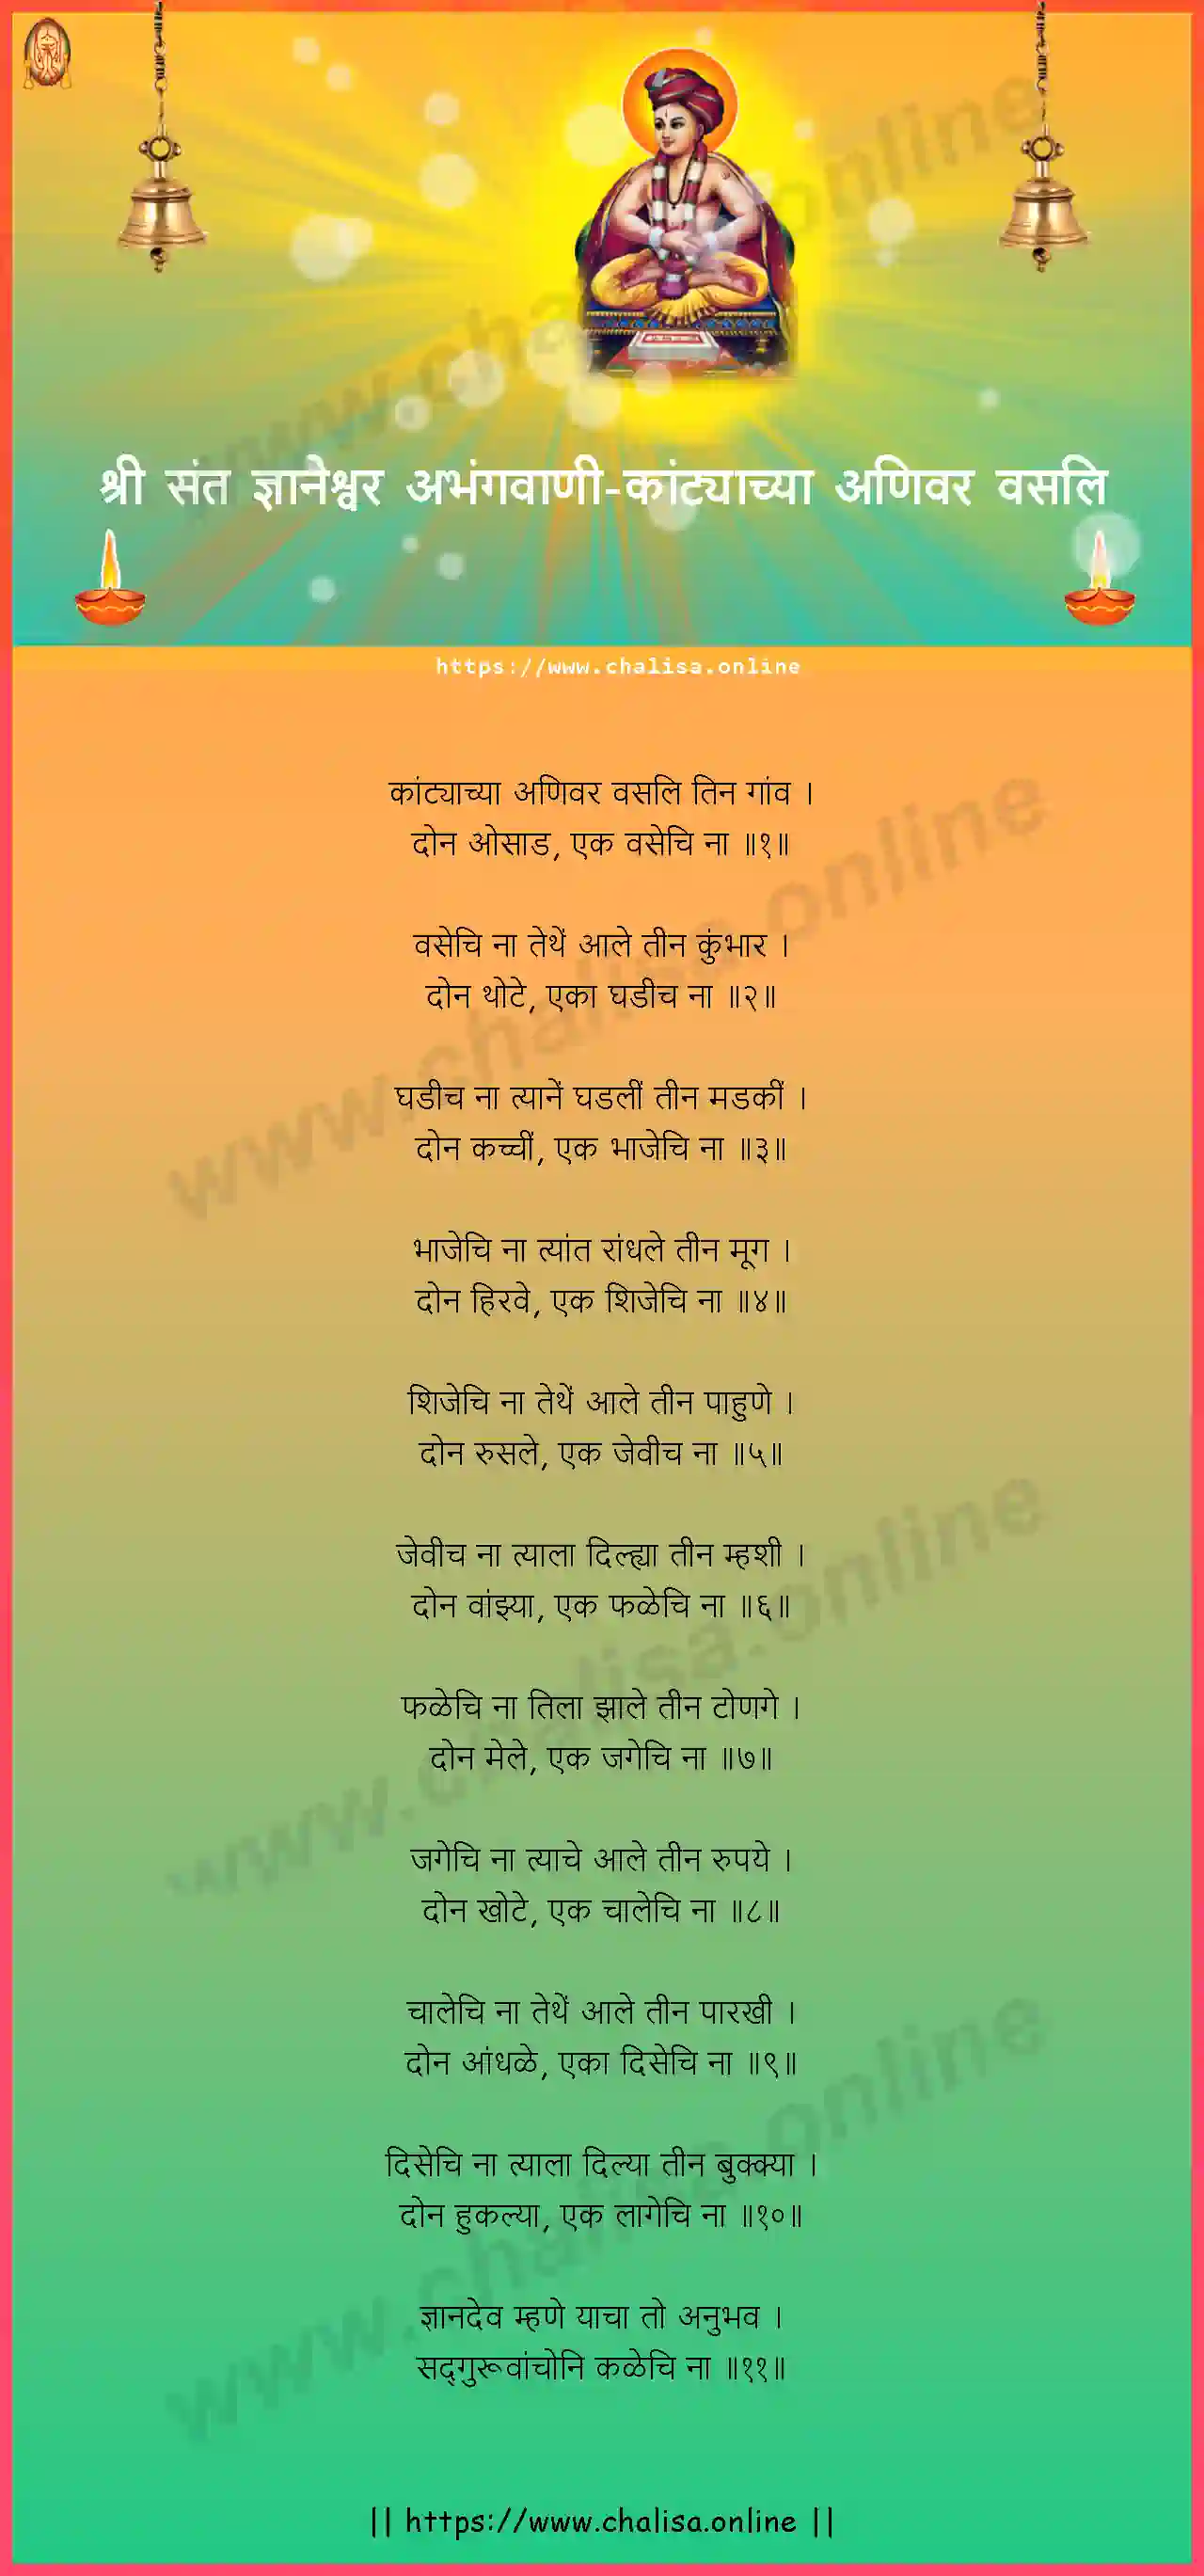 katyachya-anivar-vasale-shri-sant-dnyaneshwar-abhang-marathi-lyrics-download